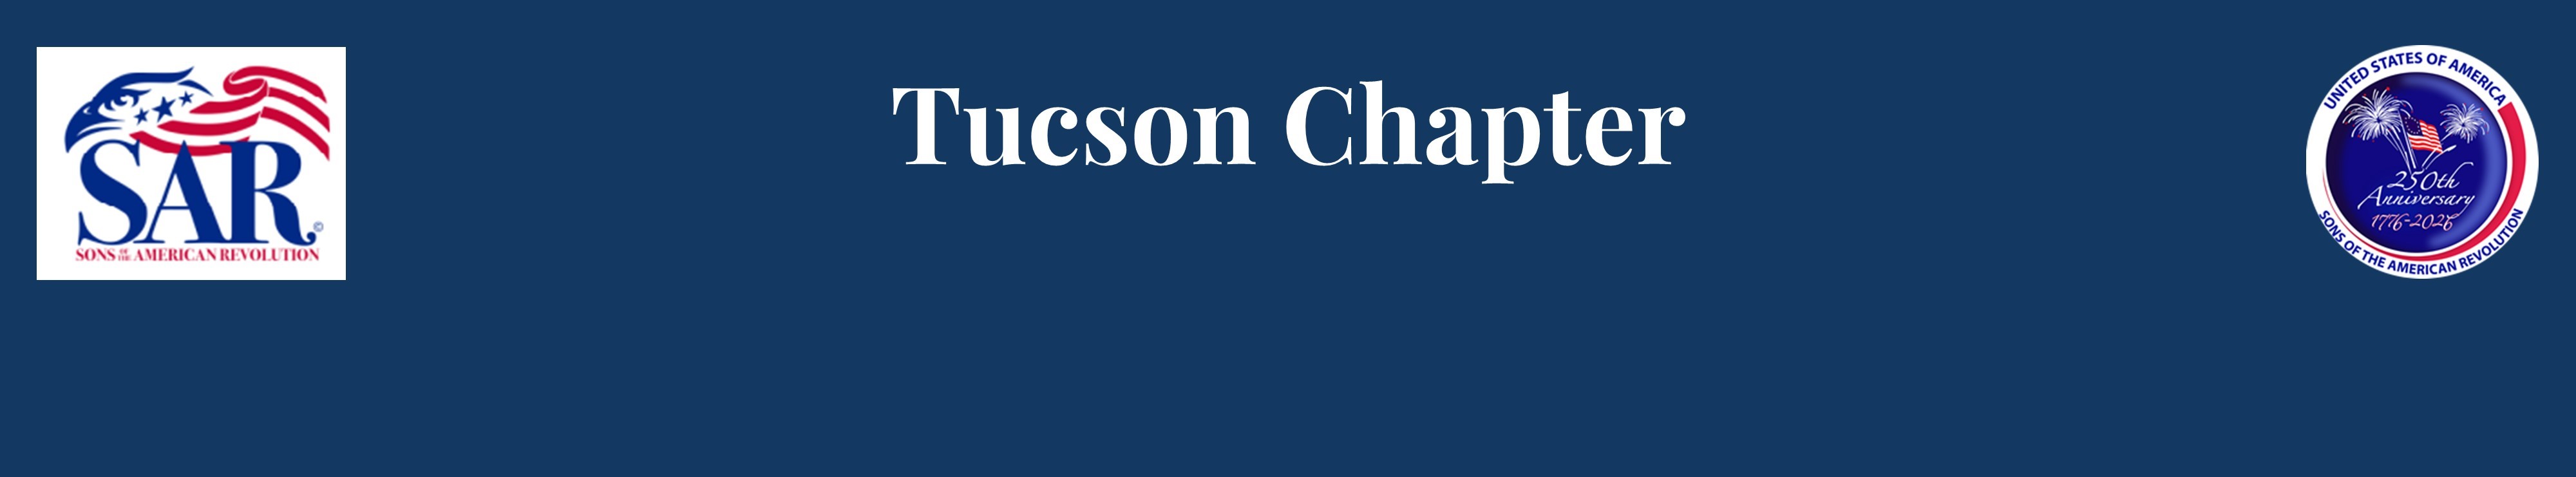 Tucson Chapter Banner